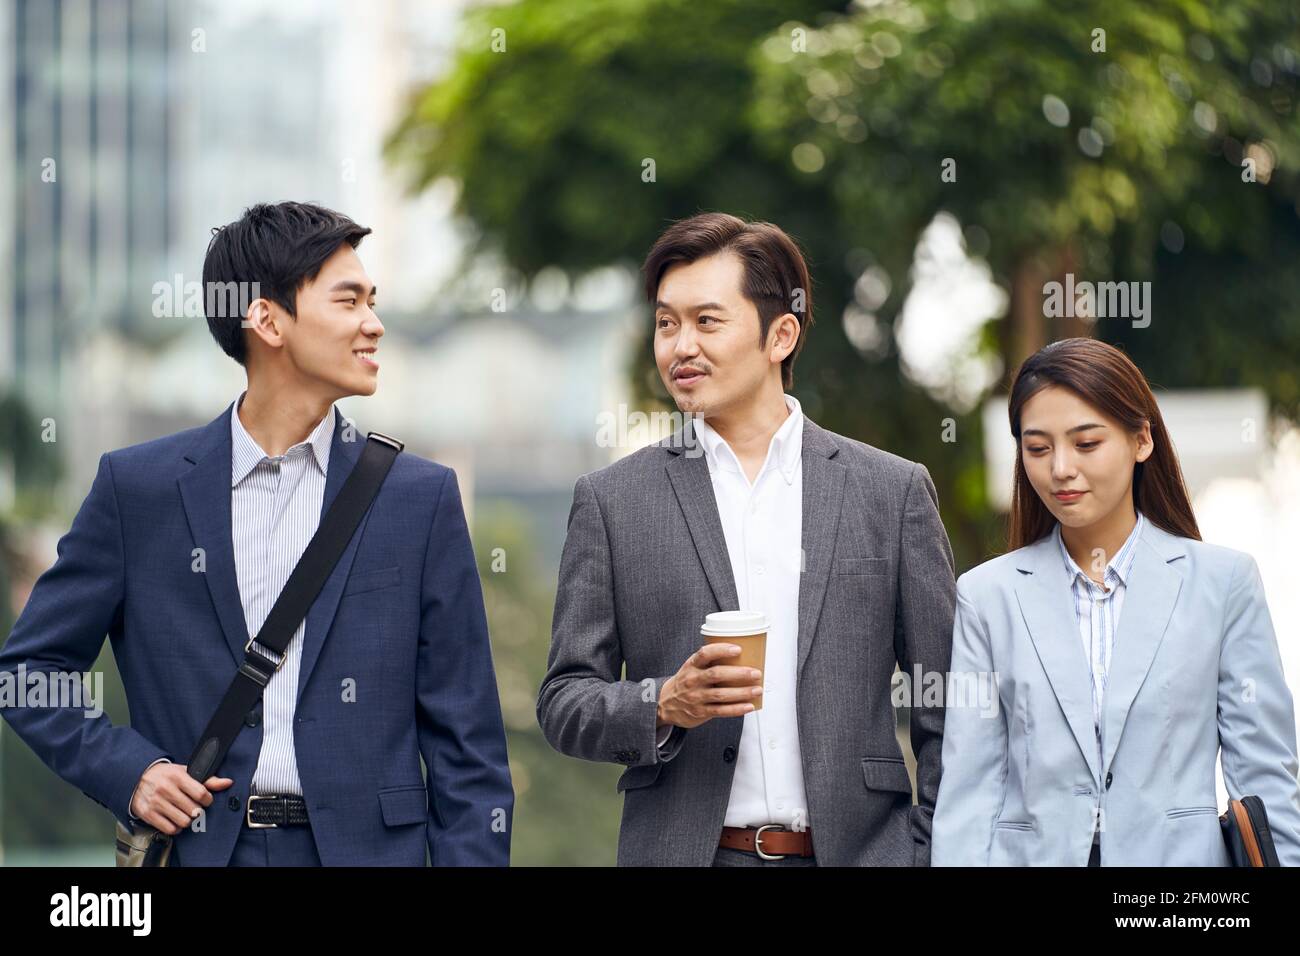 three asian business people walking talking on street Stock Photo